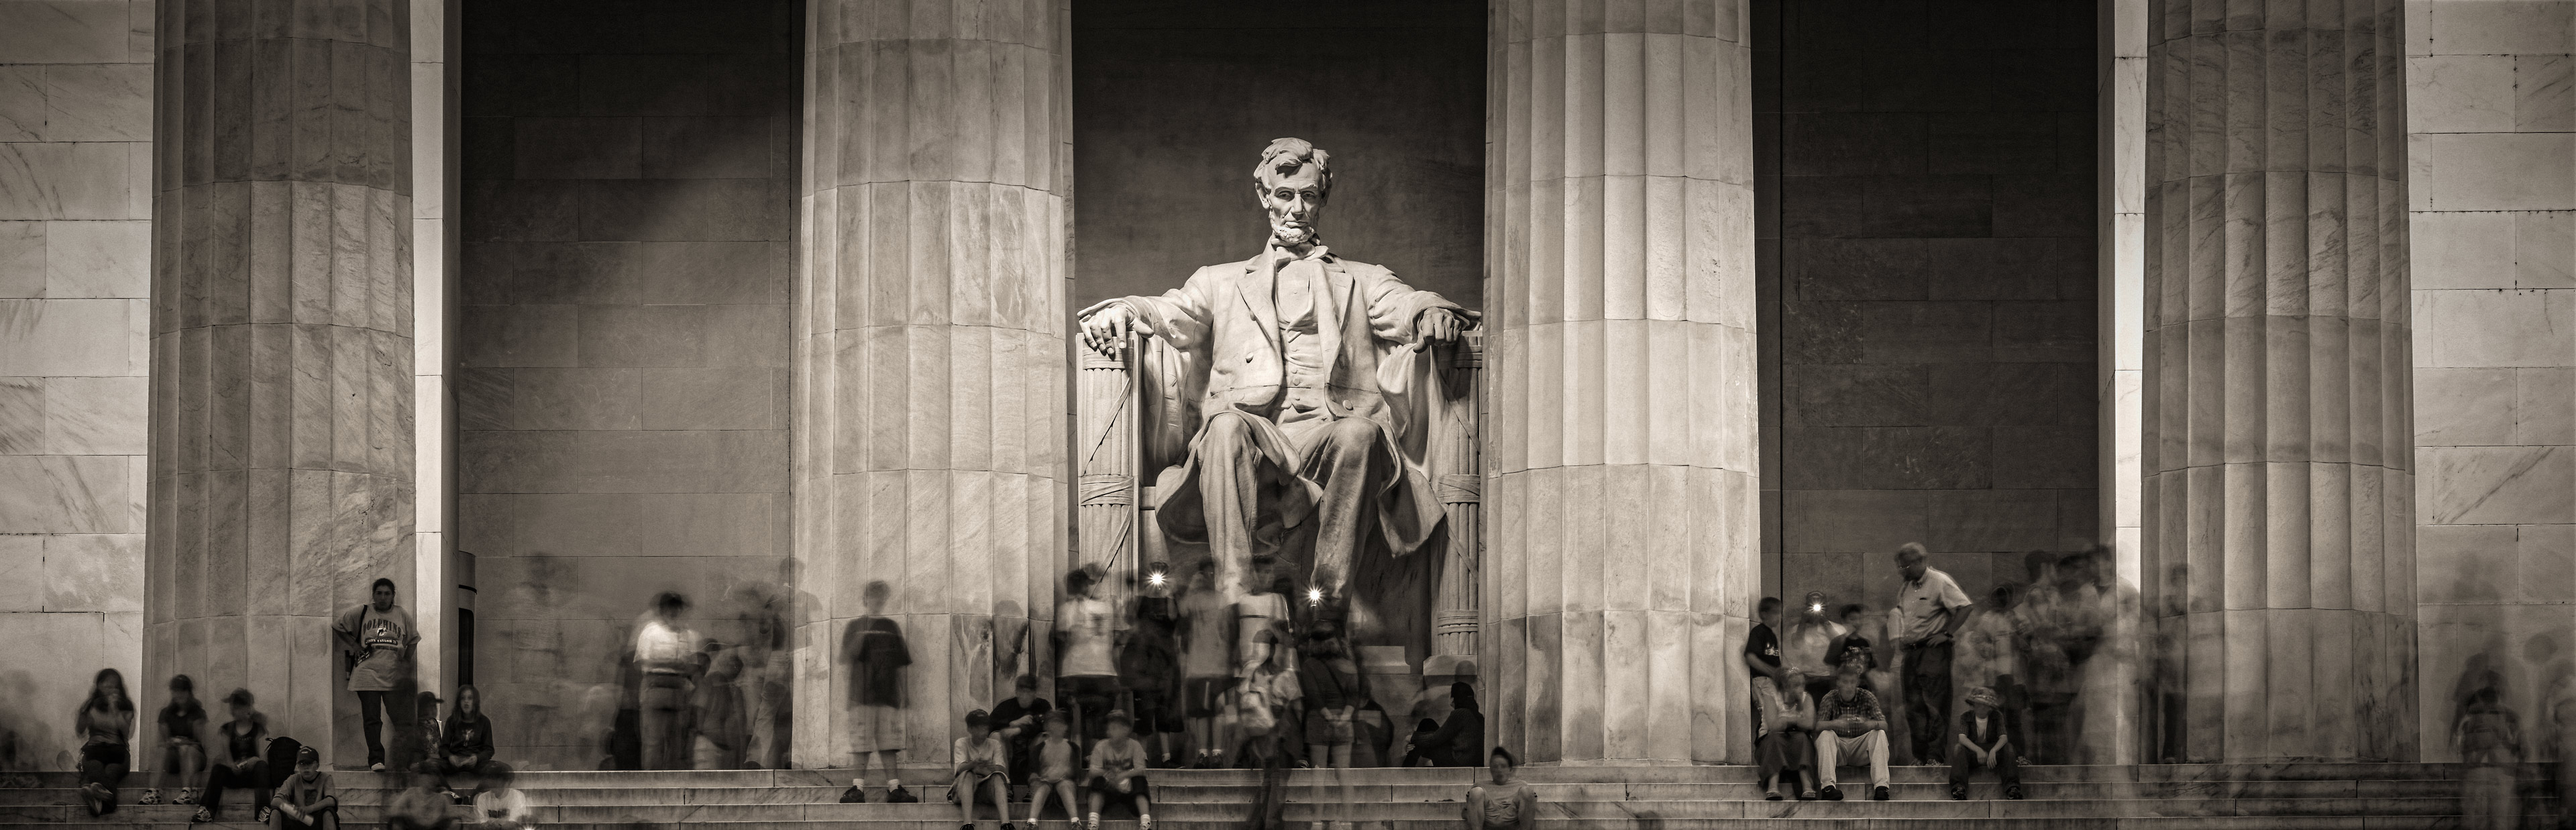 Lincoln Memorial, Washington DC, USA (74188-new.BW33)